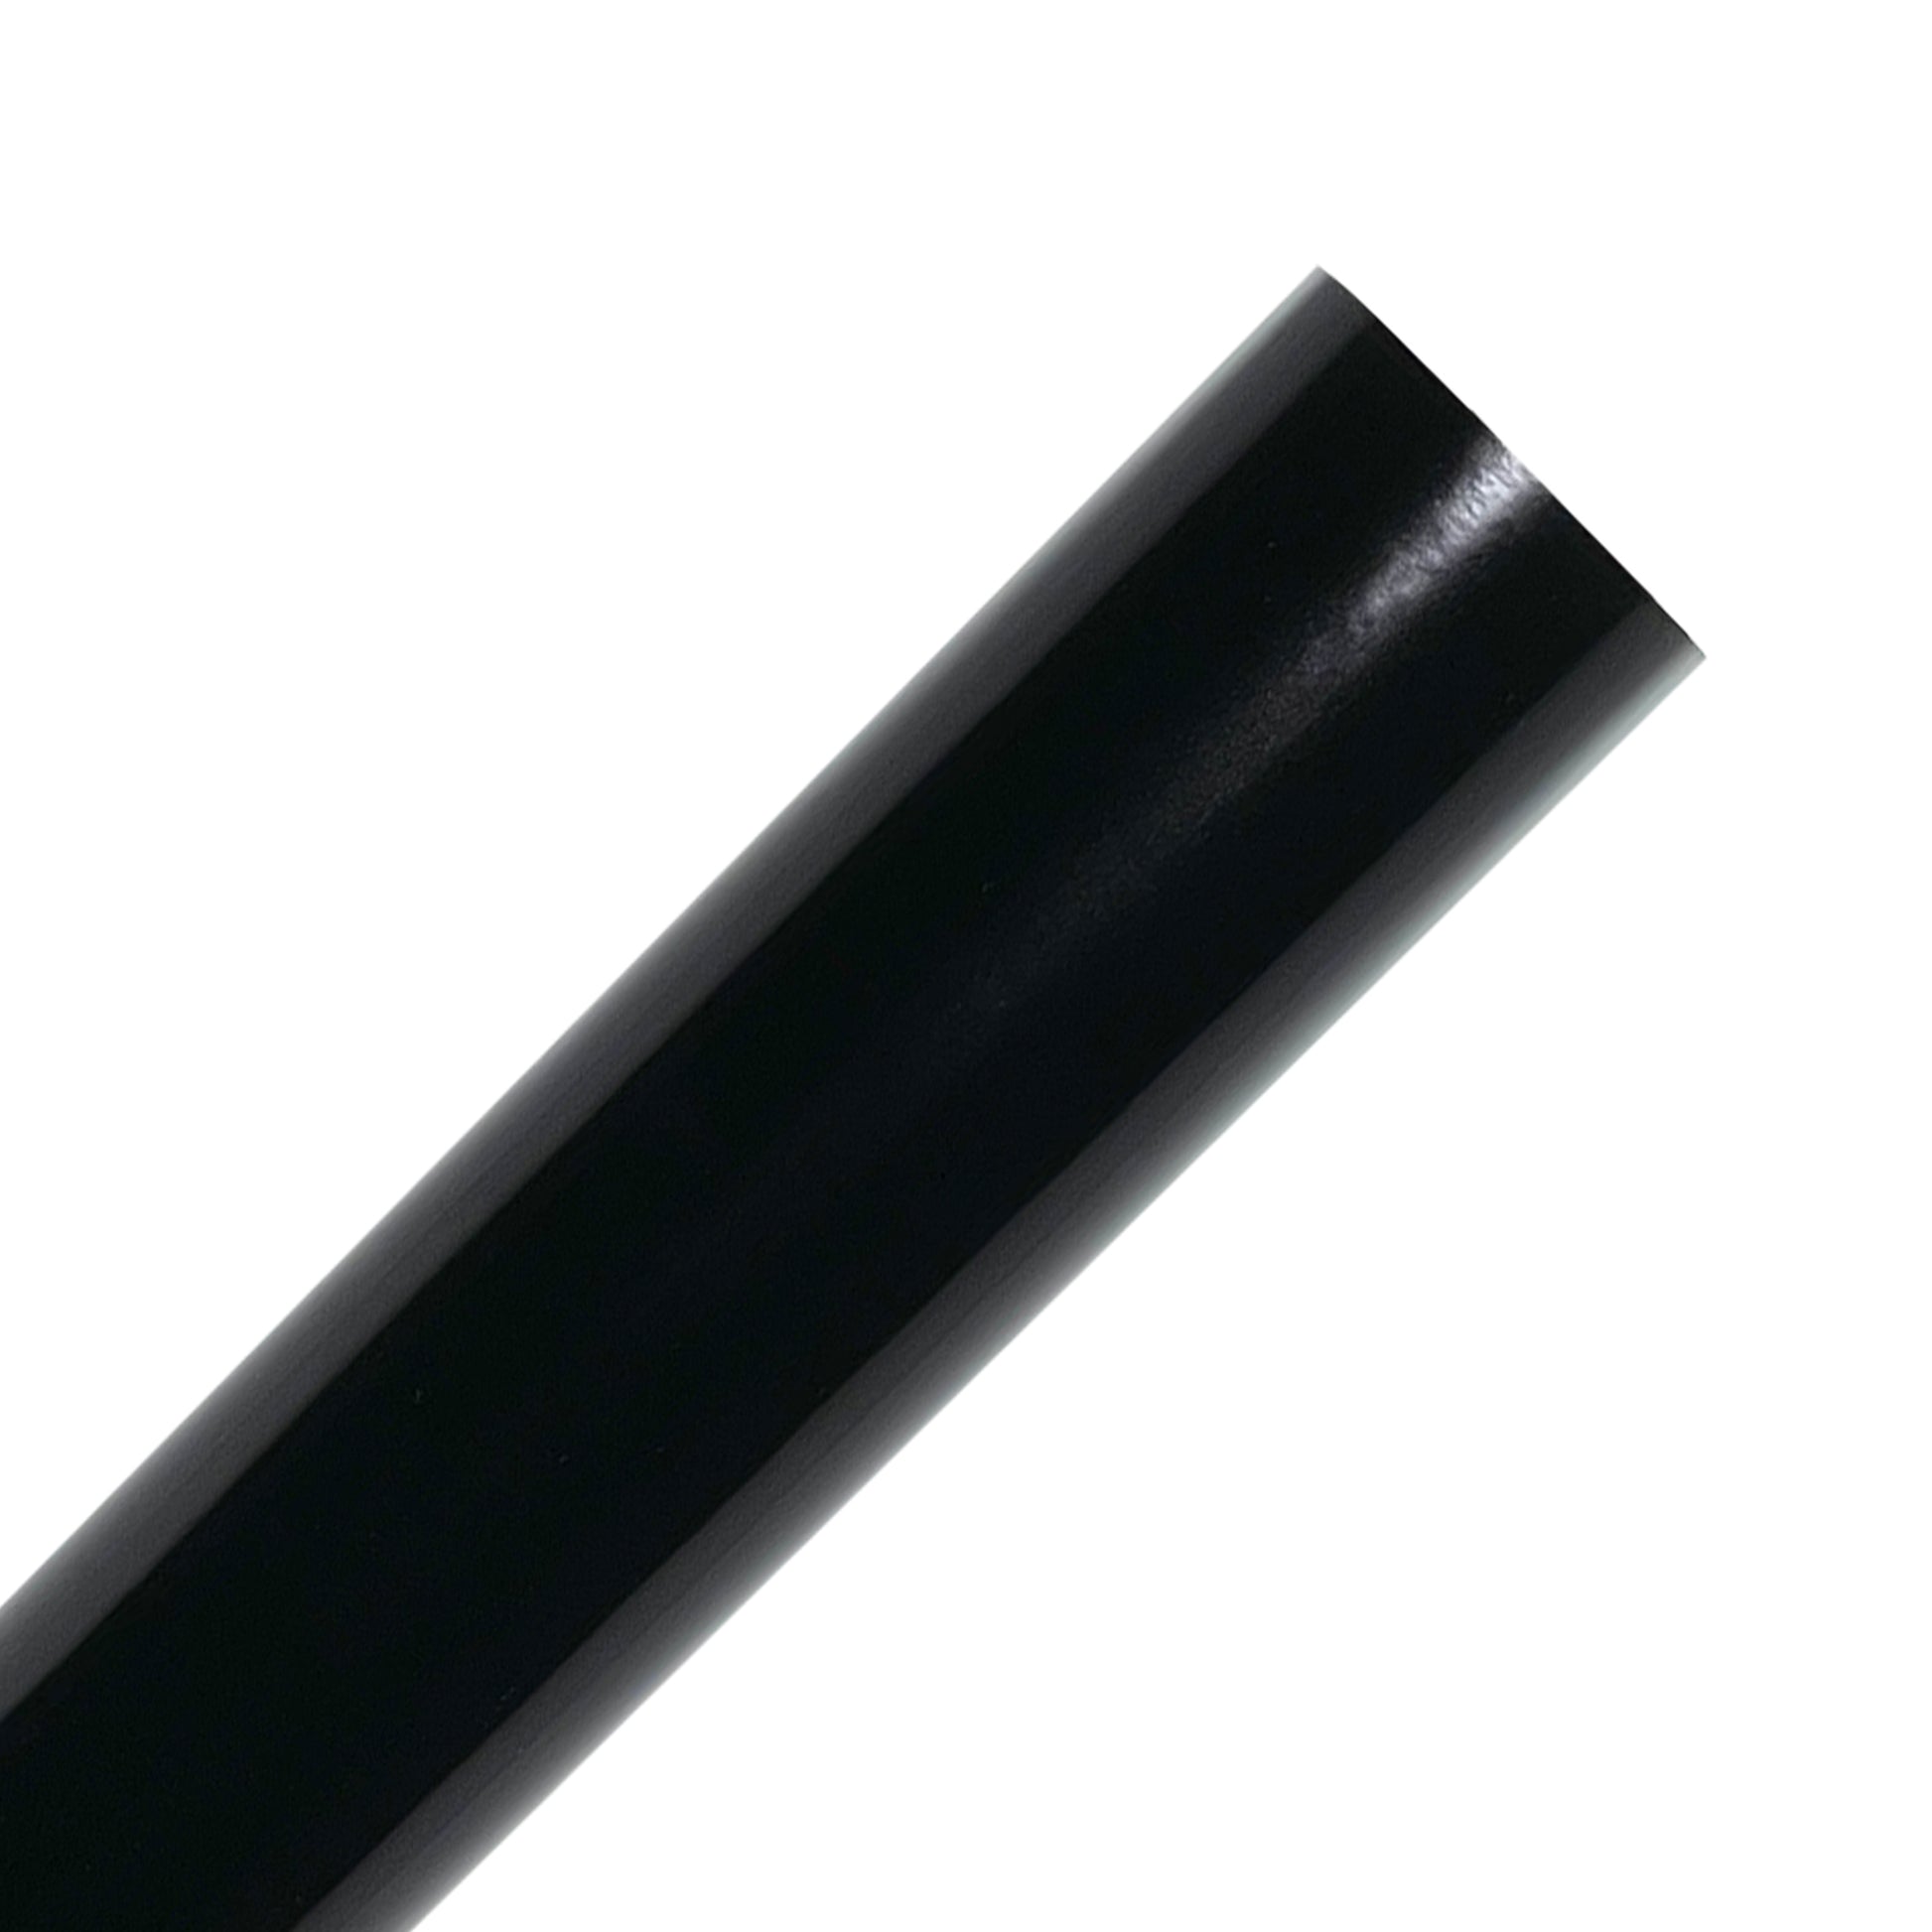 Black Glitter Adhesive Vinyl Rolls By Craftables – shopcraftables